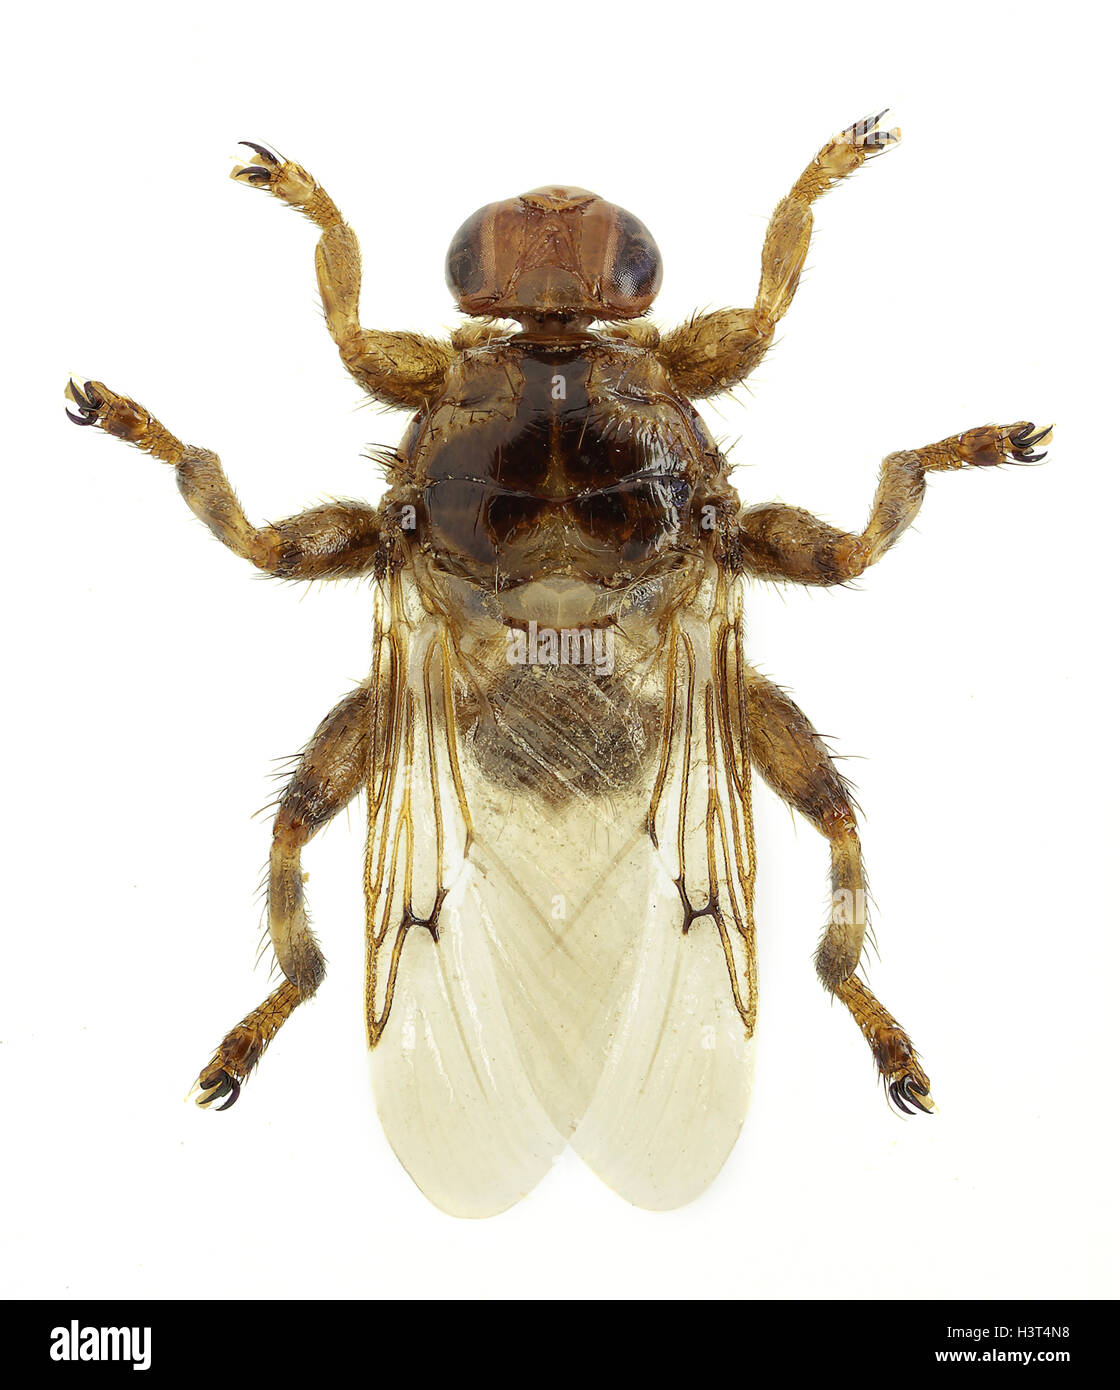 Louse fly Hippobosca equina Stock Photo